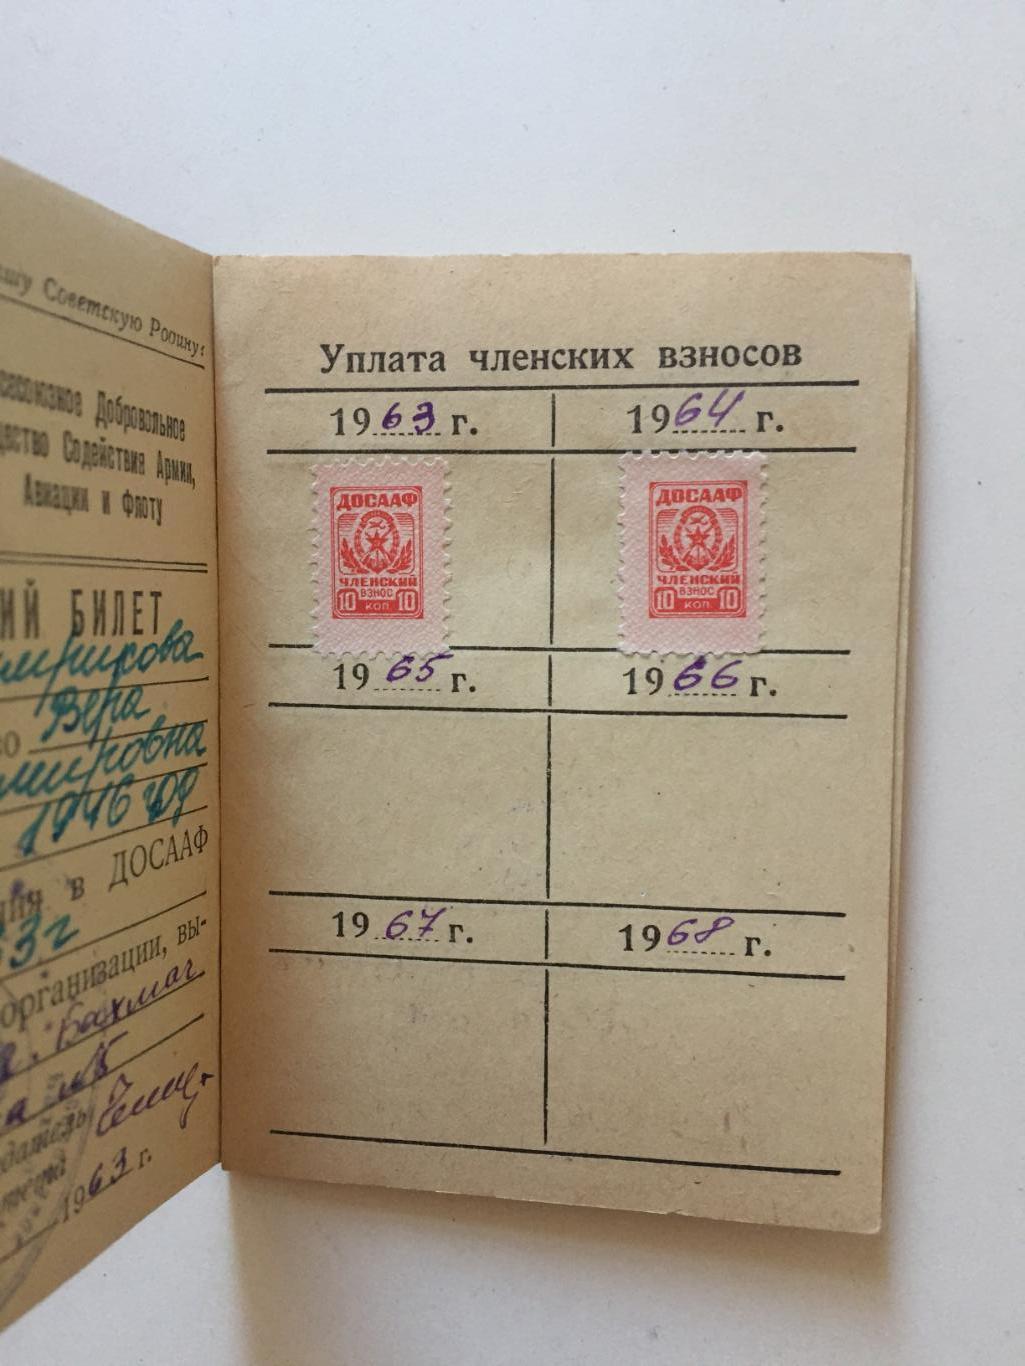 Членский билет ДОСААФ 1963 1